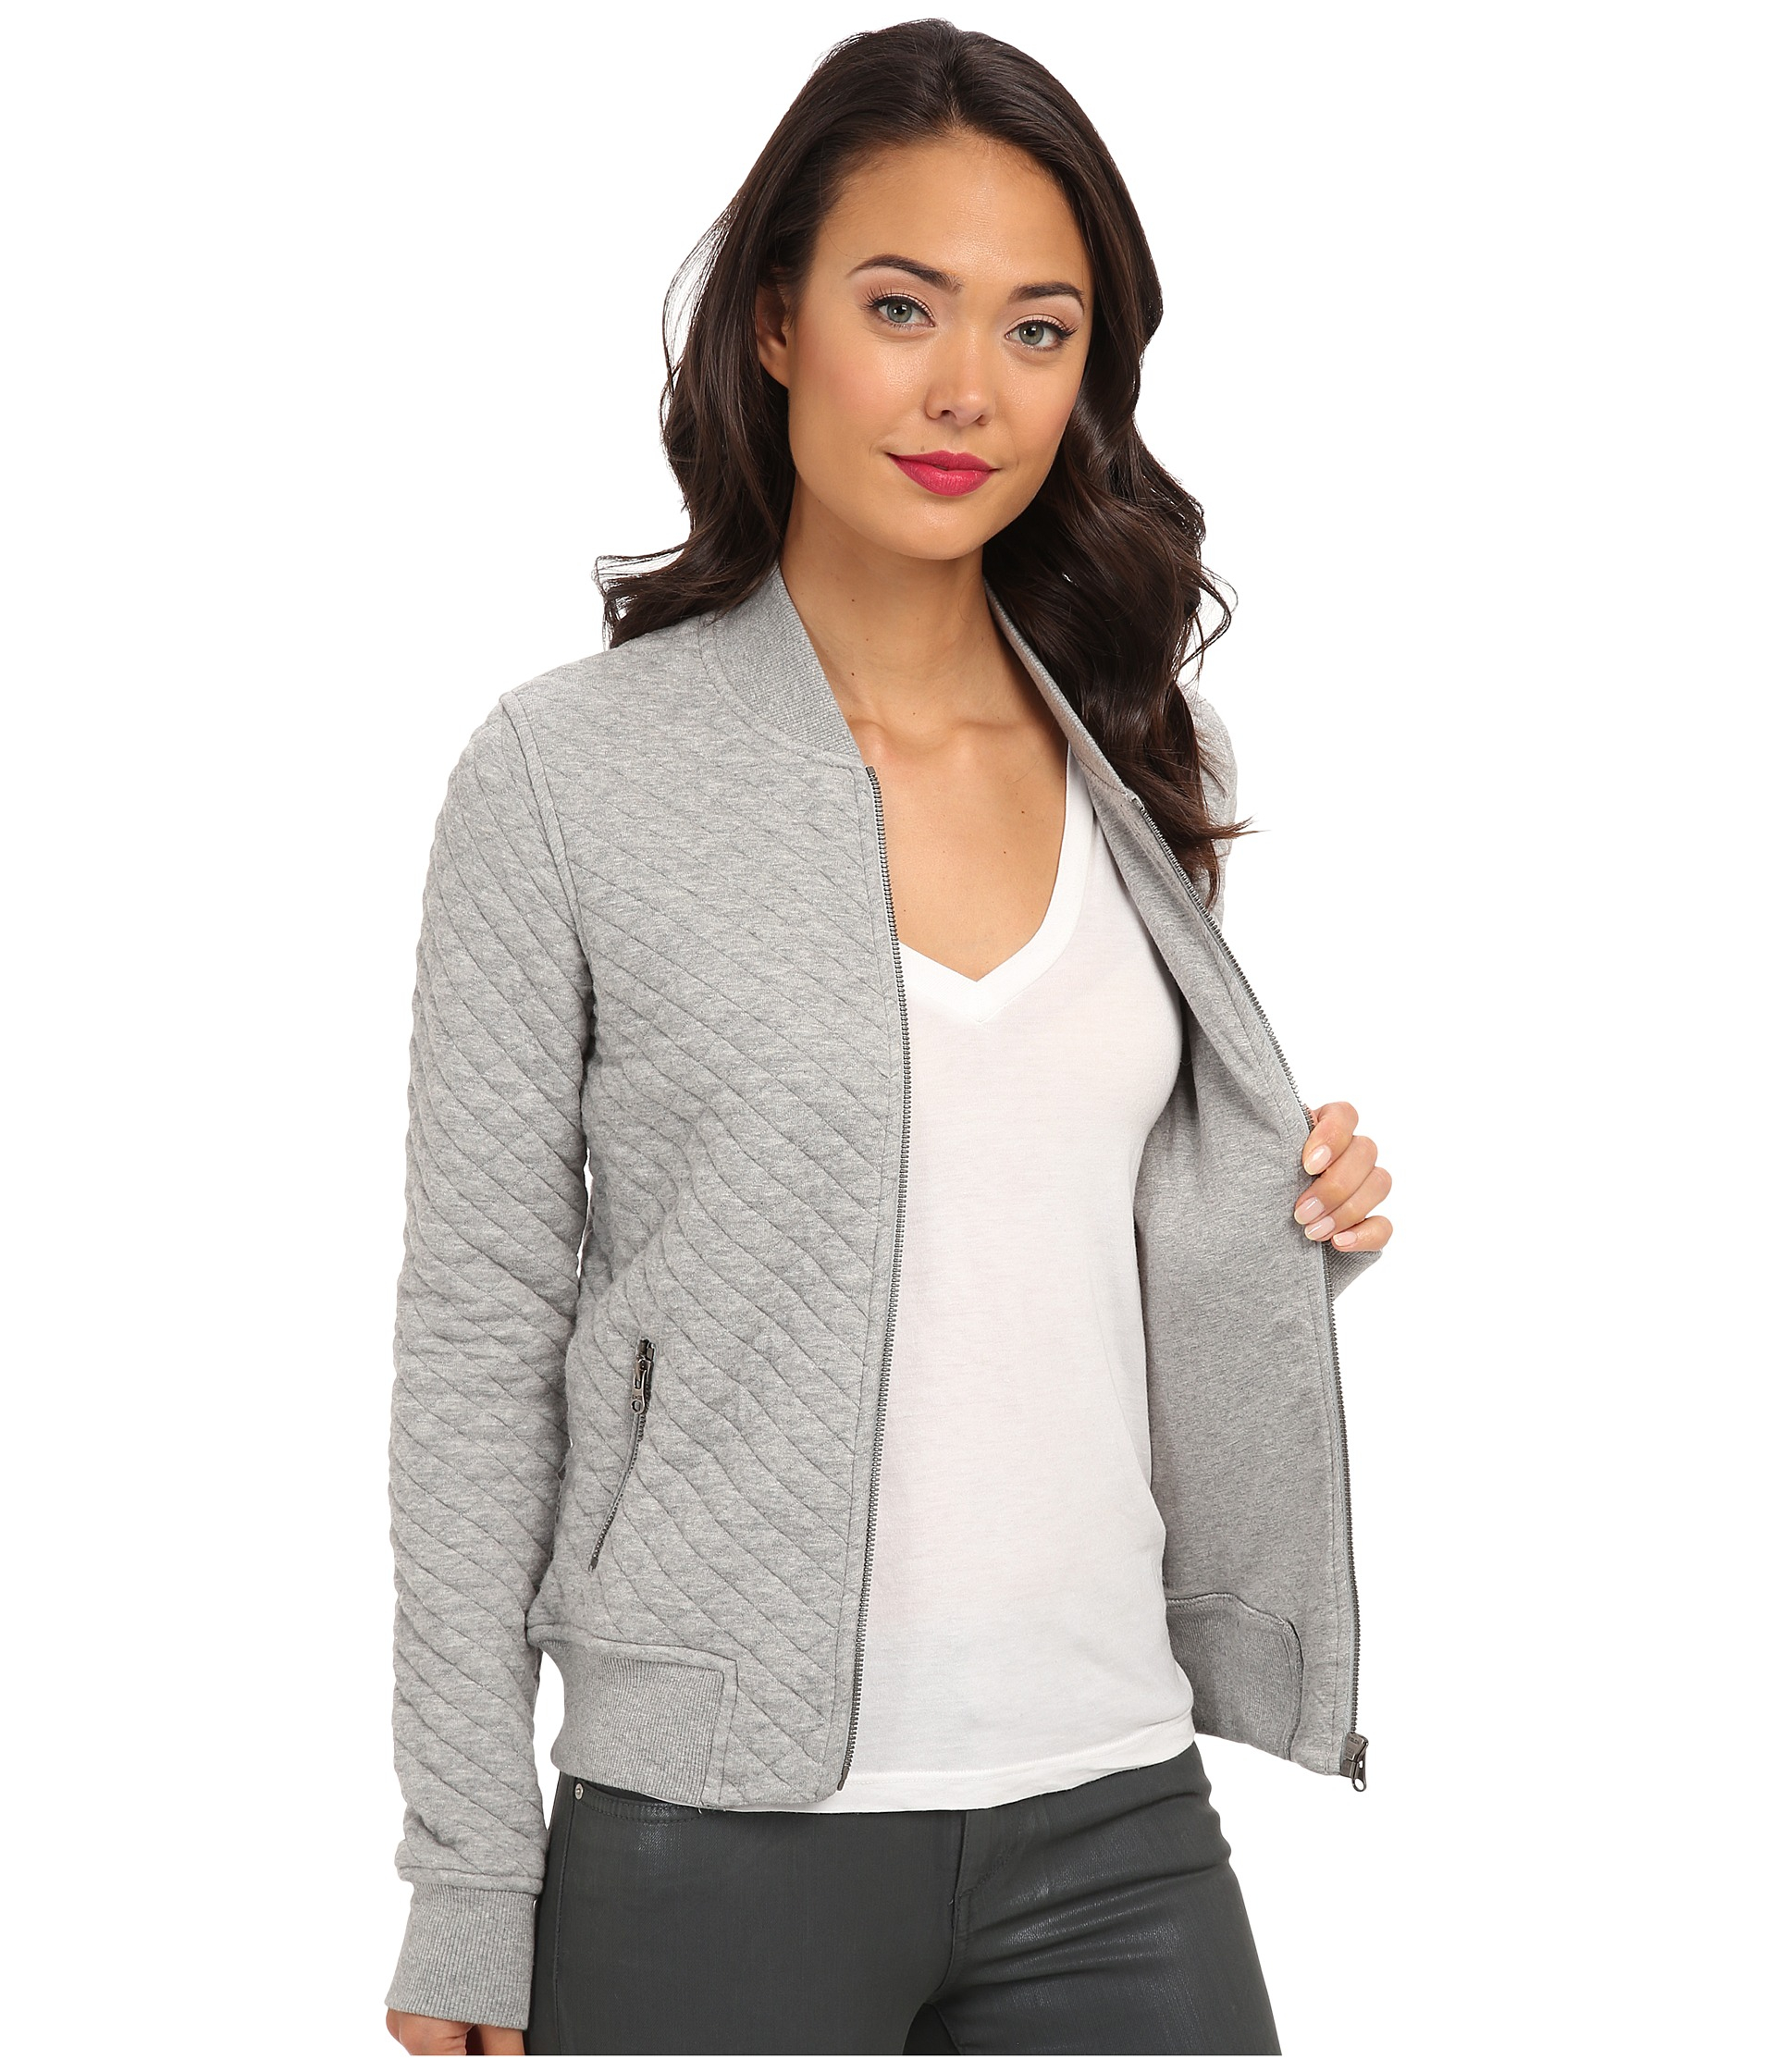 womens grey converse jacket Online 